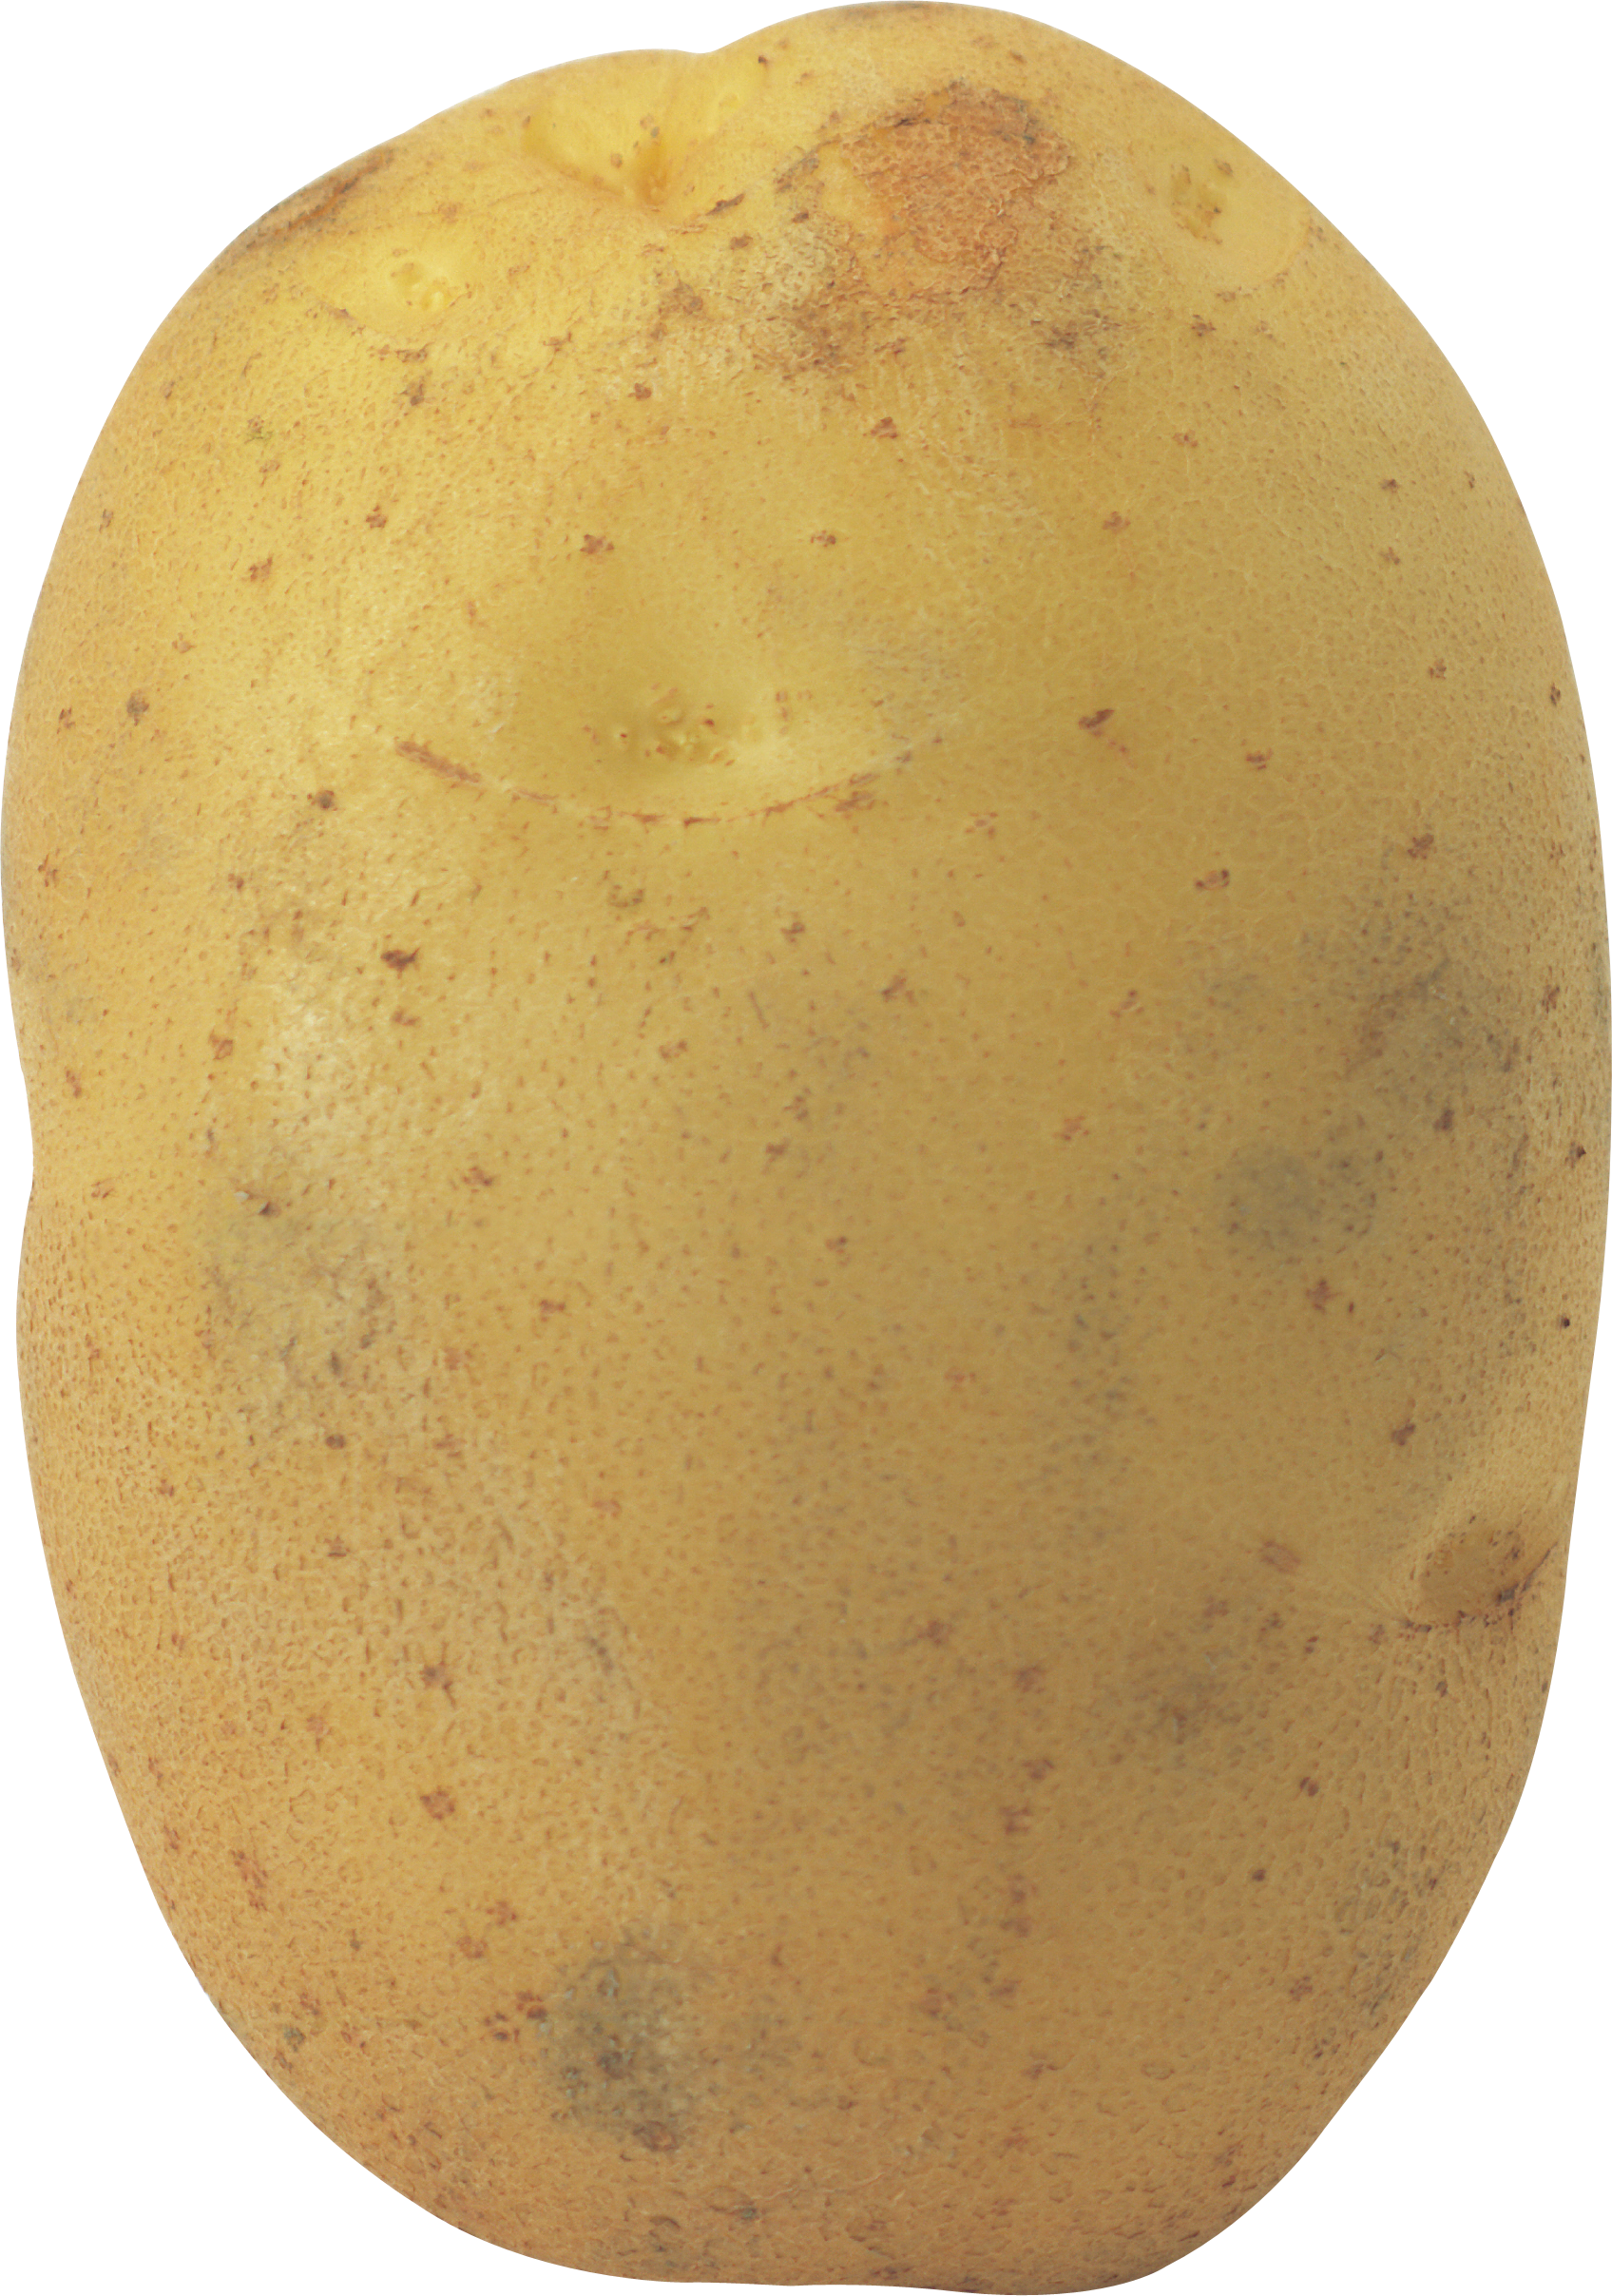 Batatas grandes